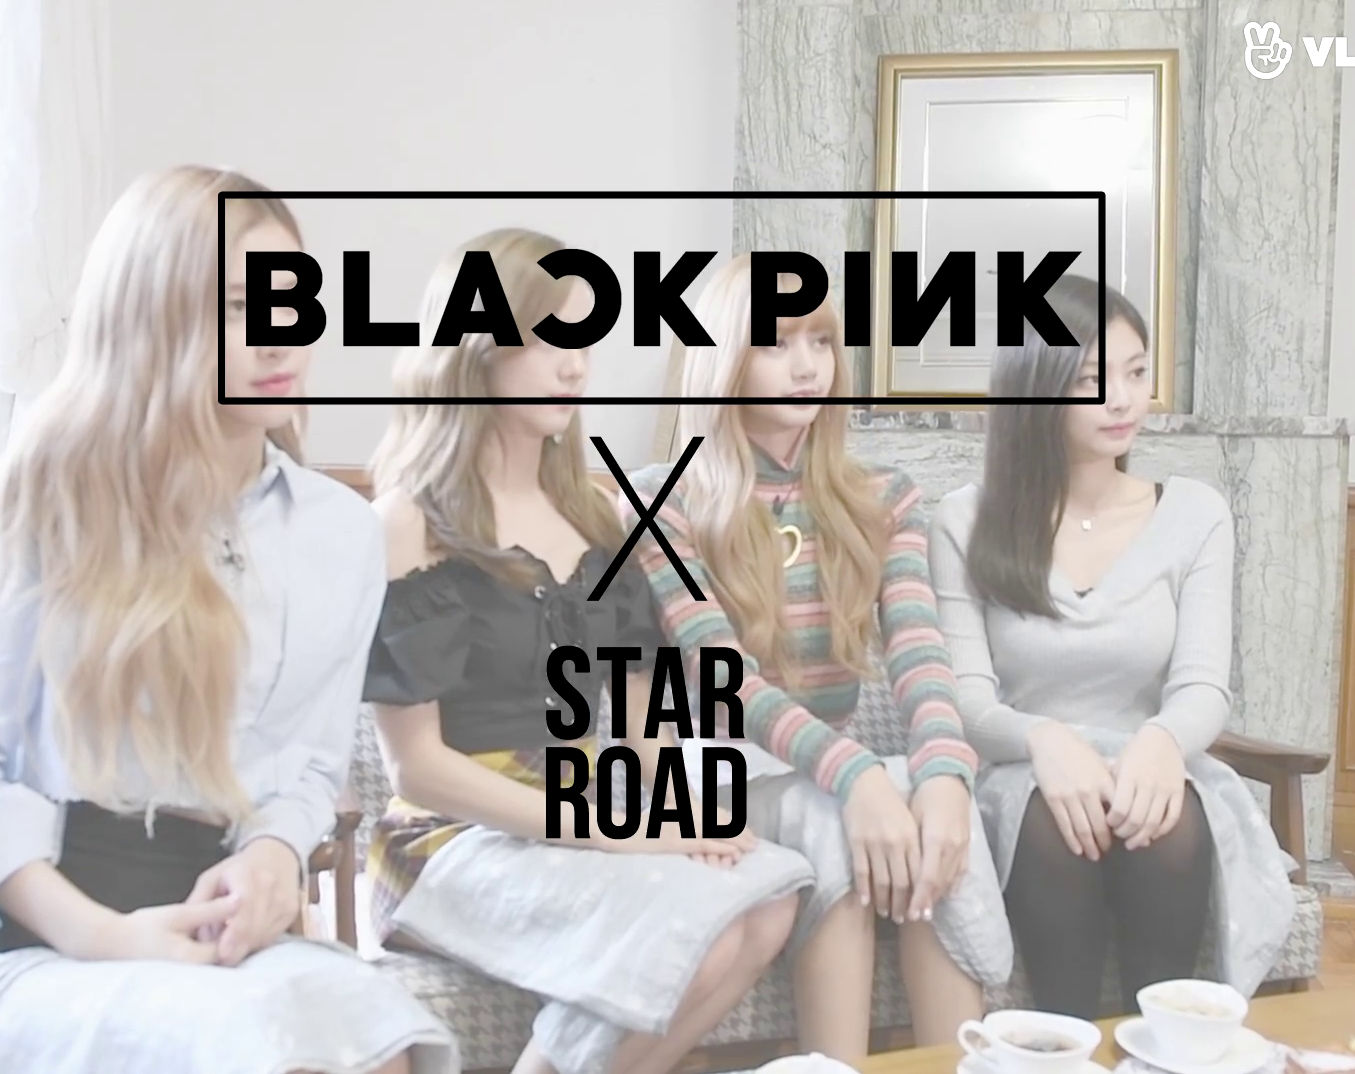 Star Road: BLACKPINK (2018)